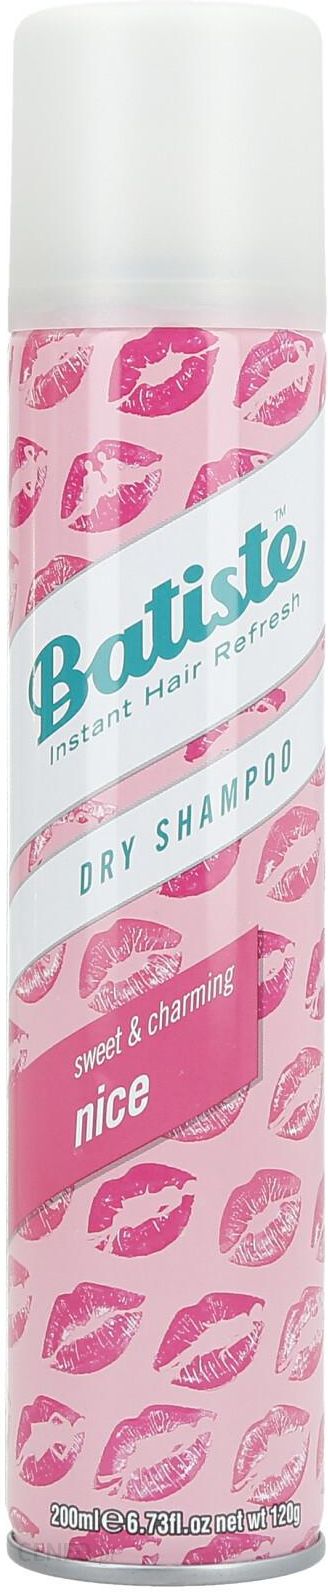 szampon suchy batiste nice